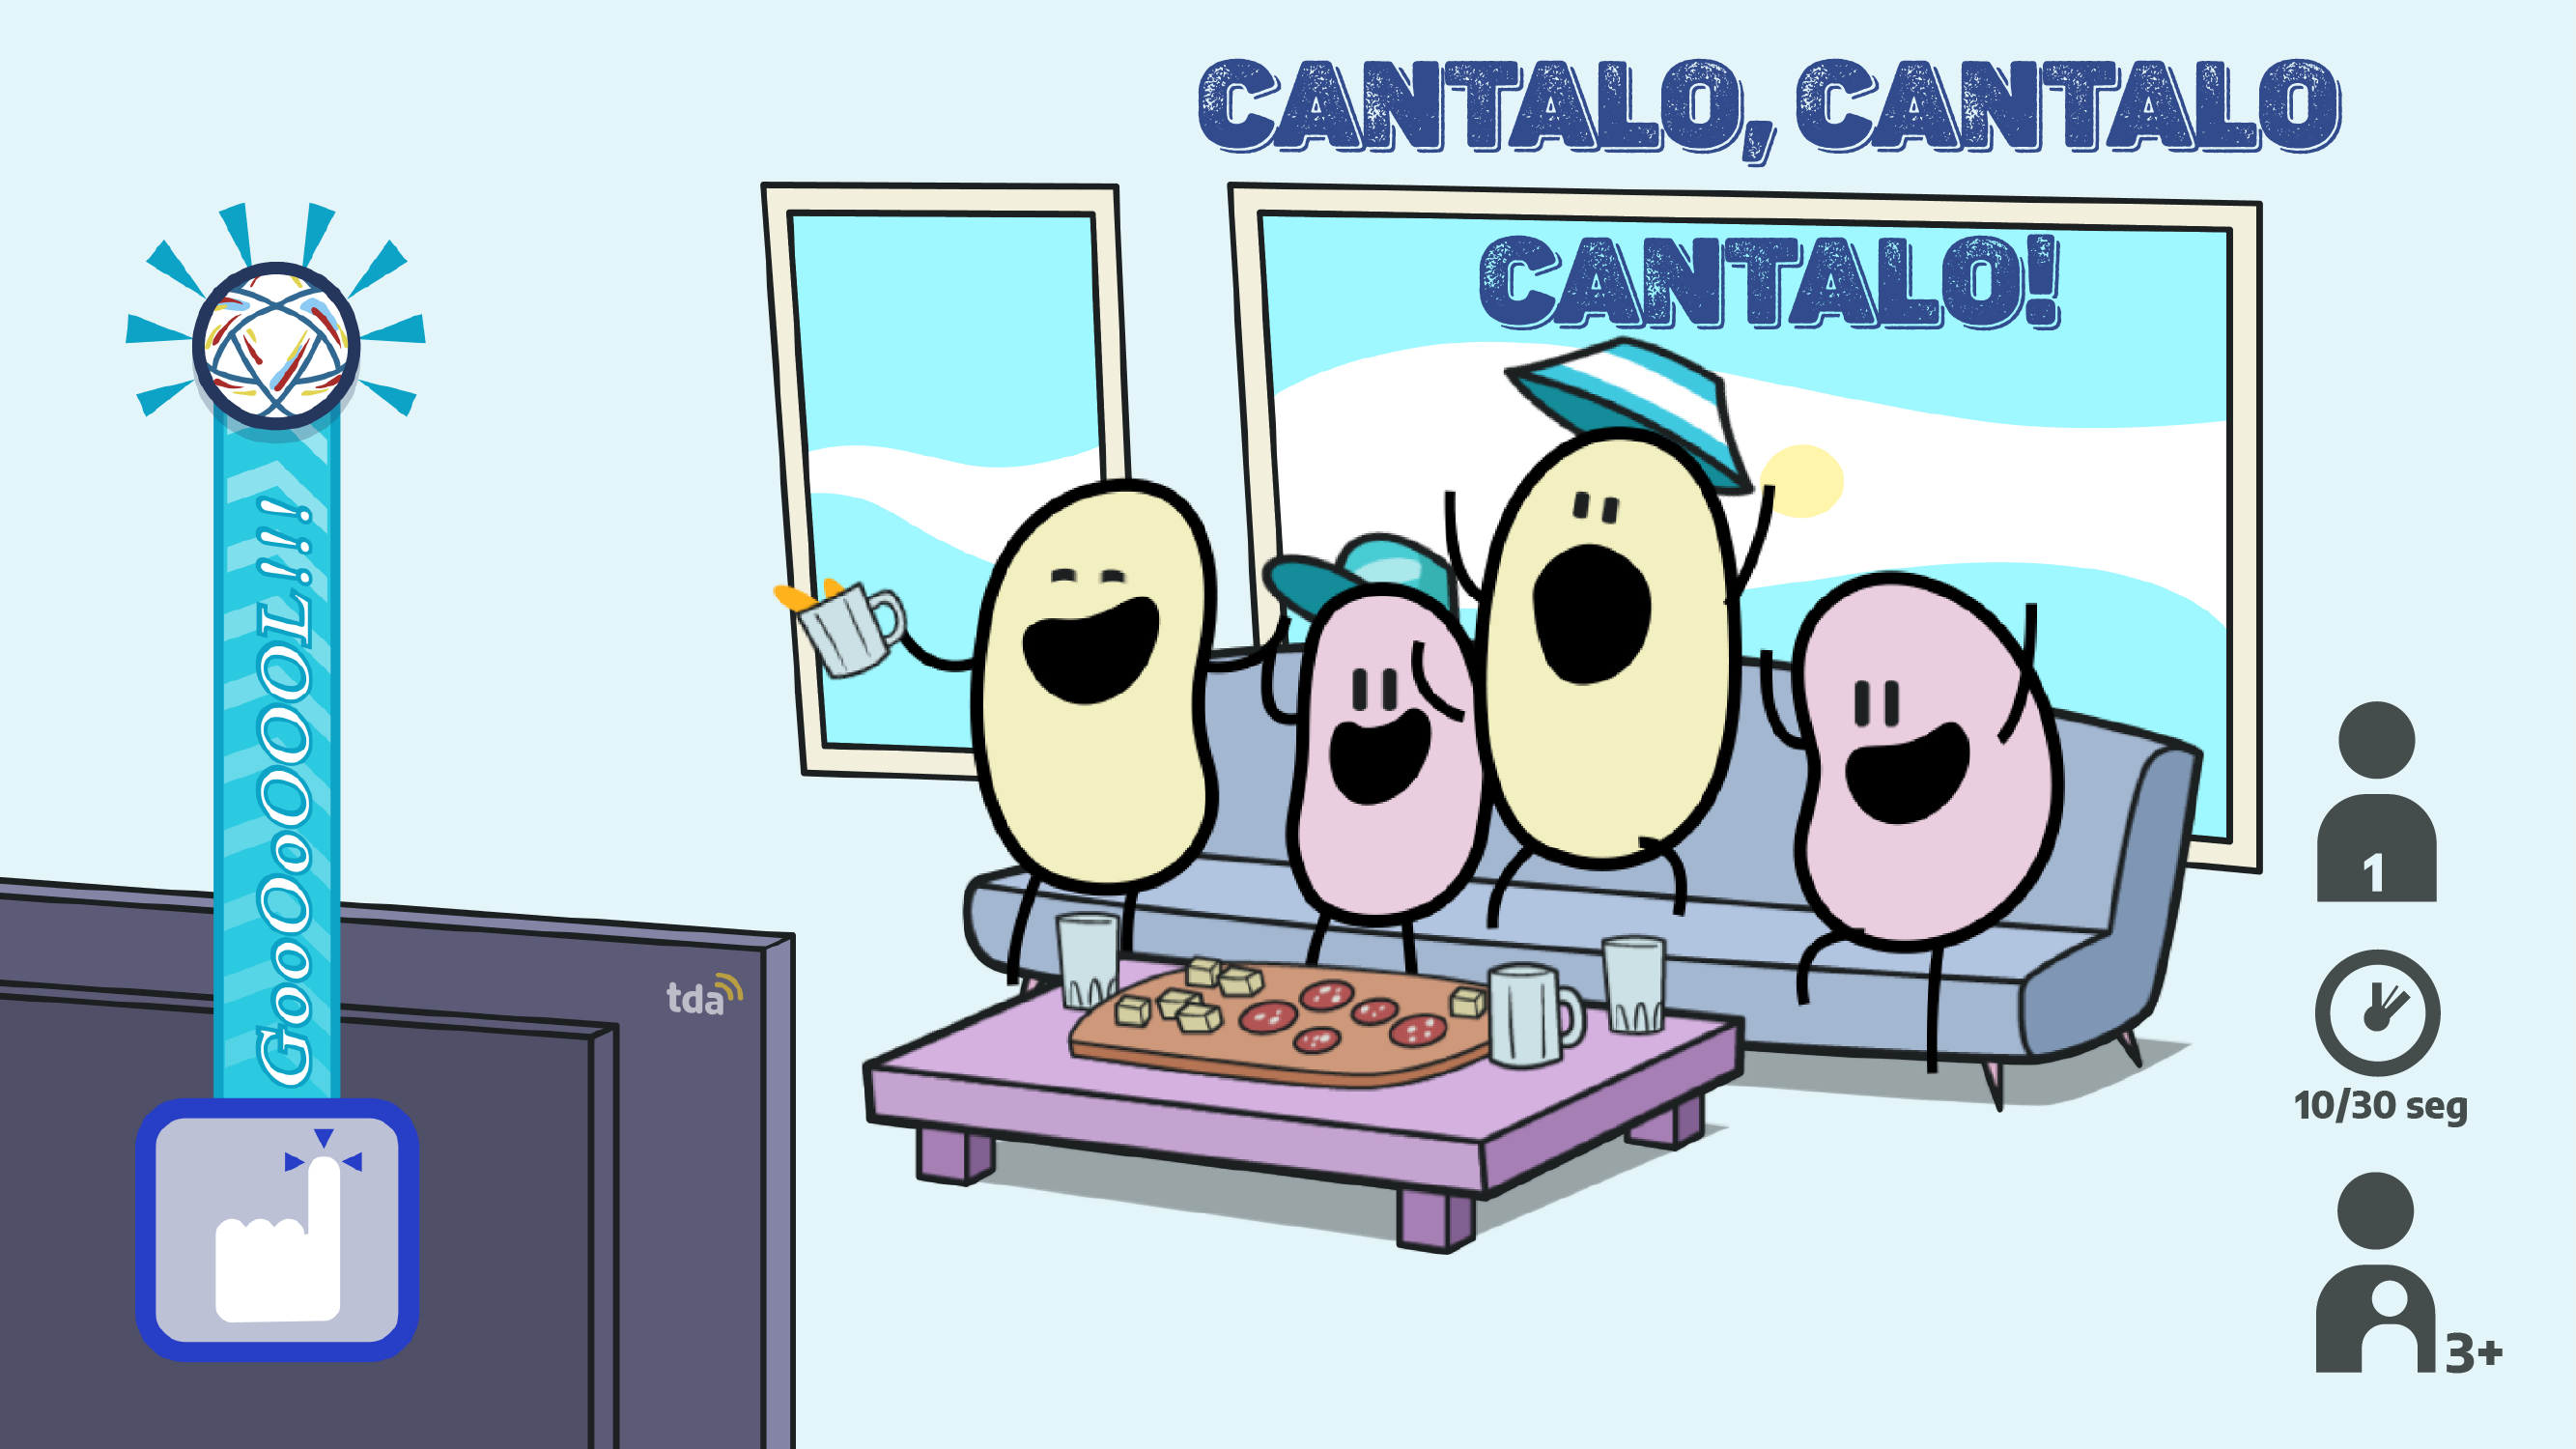 Cantalo, cantalo